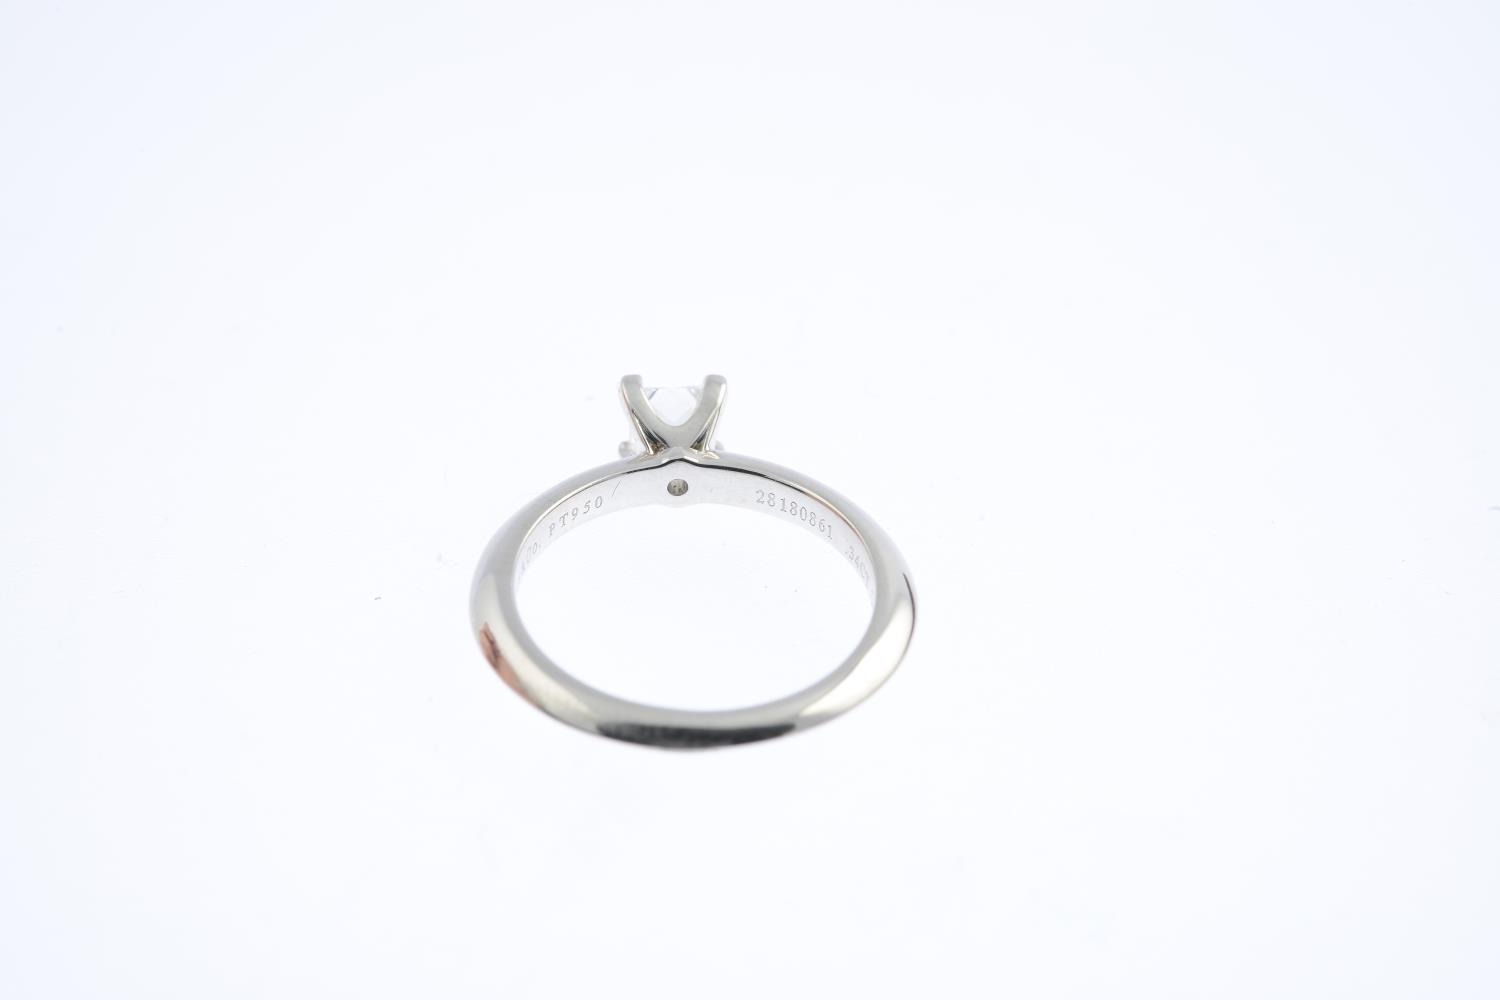 TIFFANY & CO. - a platinum diamond single-stone ring. - Image 3 of 4